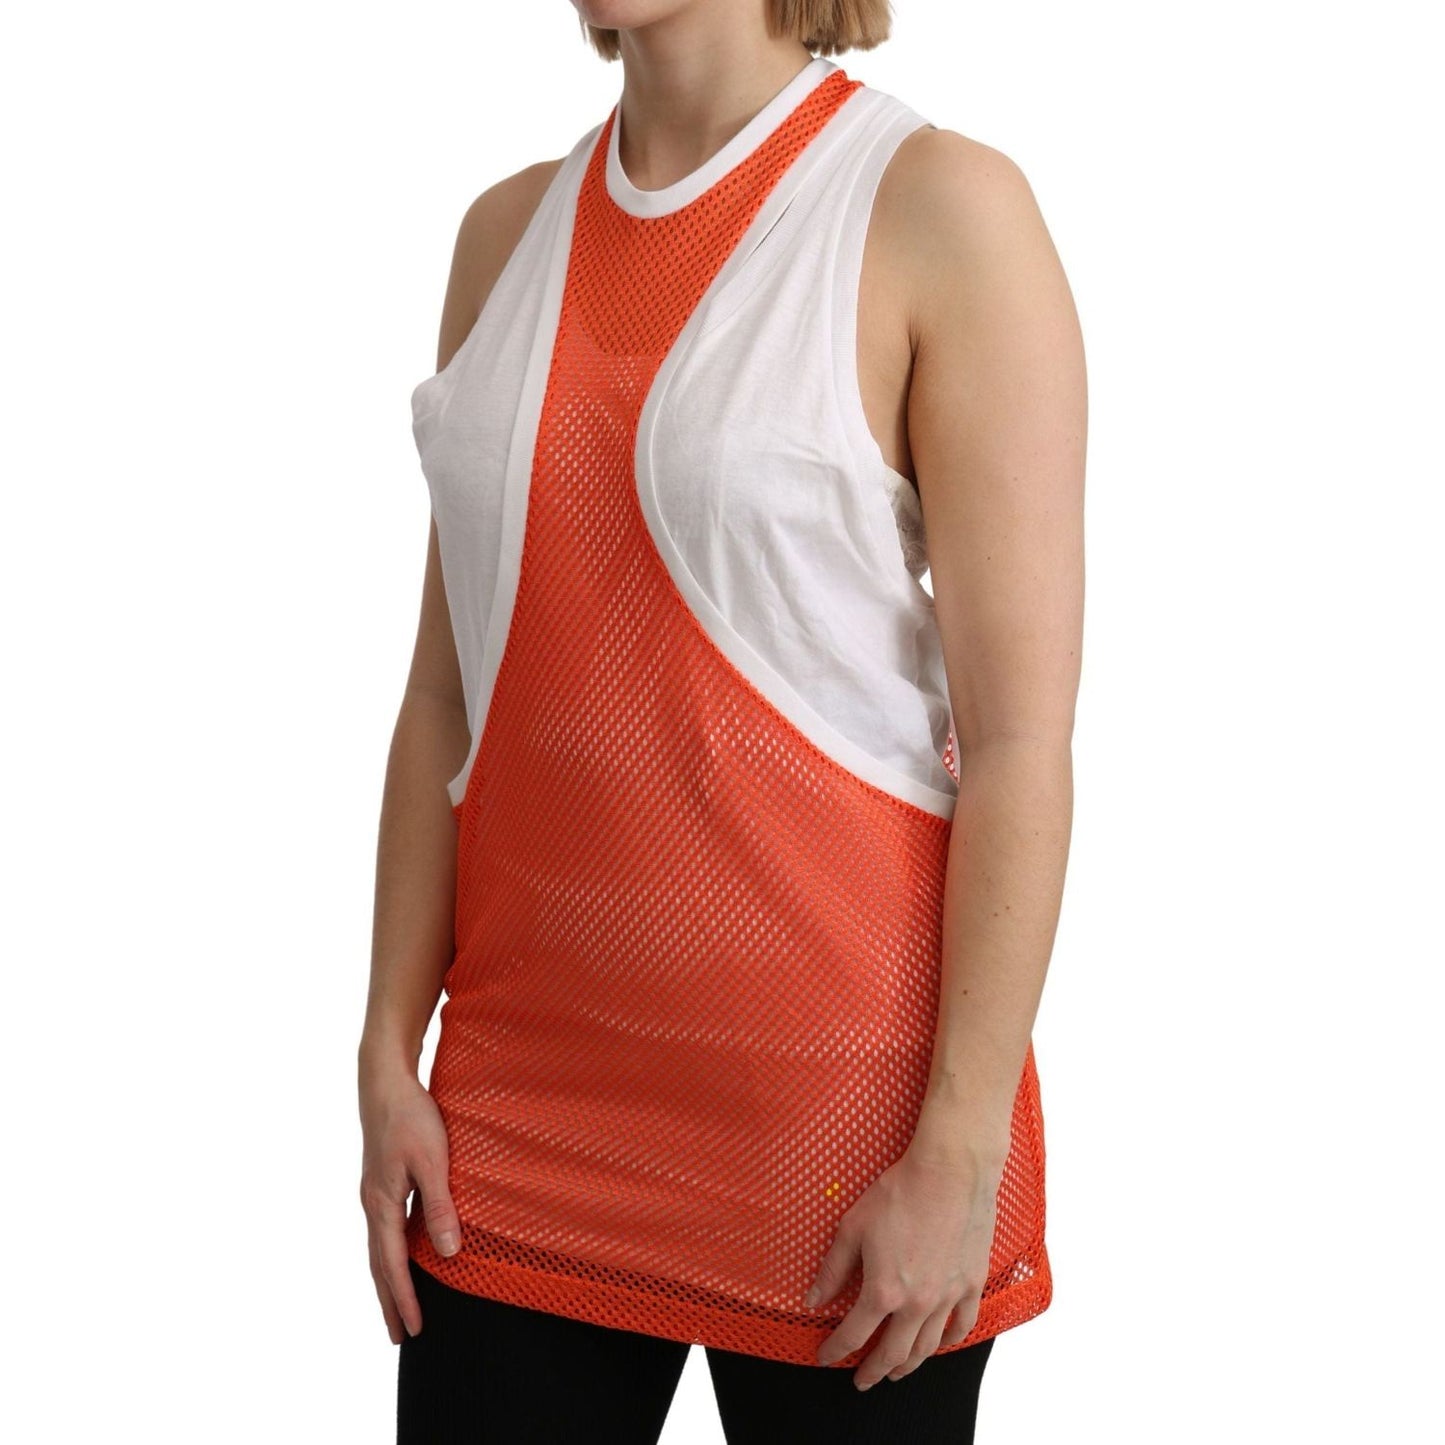 Dsquared² Elegant Sleeveless Cotton Tank in Orange orange-white-crewneck-sleeveless-tank-t-shirt-dress-top IMG_1514-scaled-f9754151-e2c.jpg